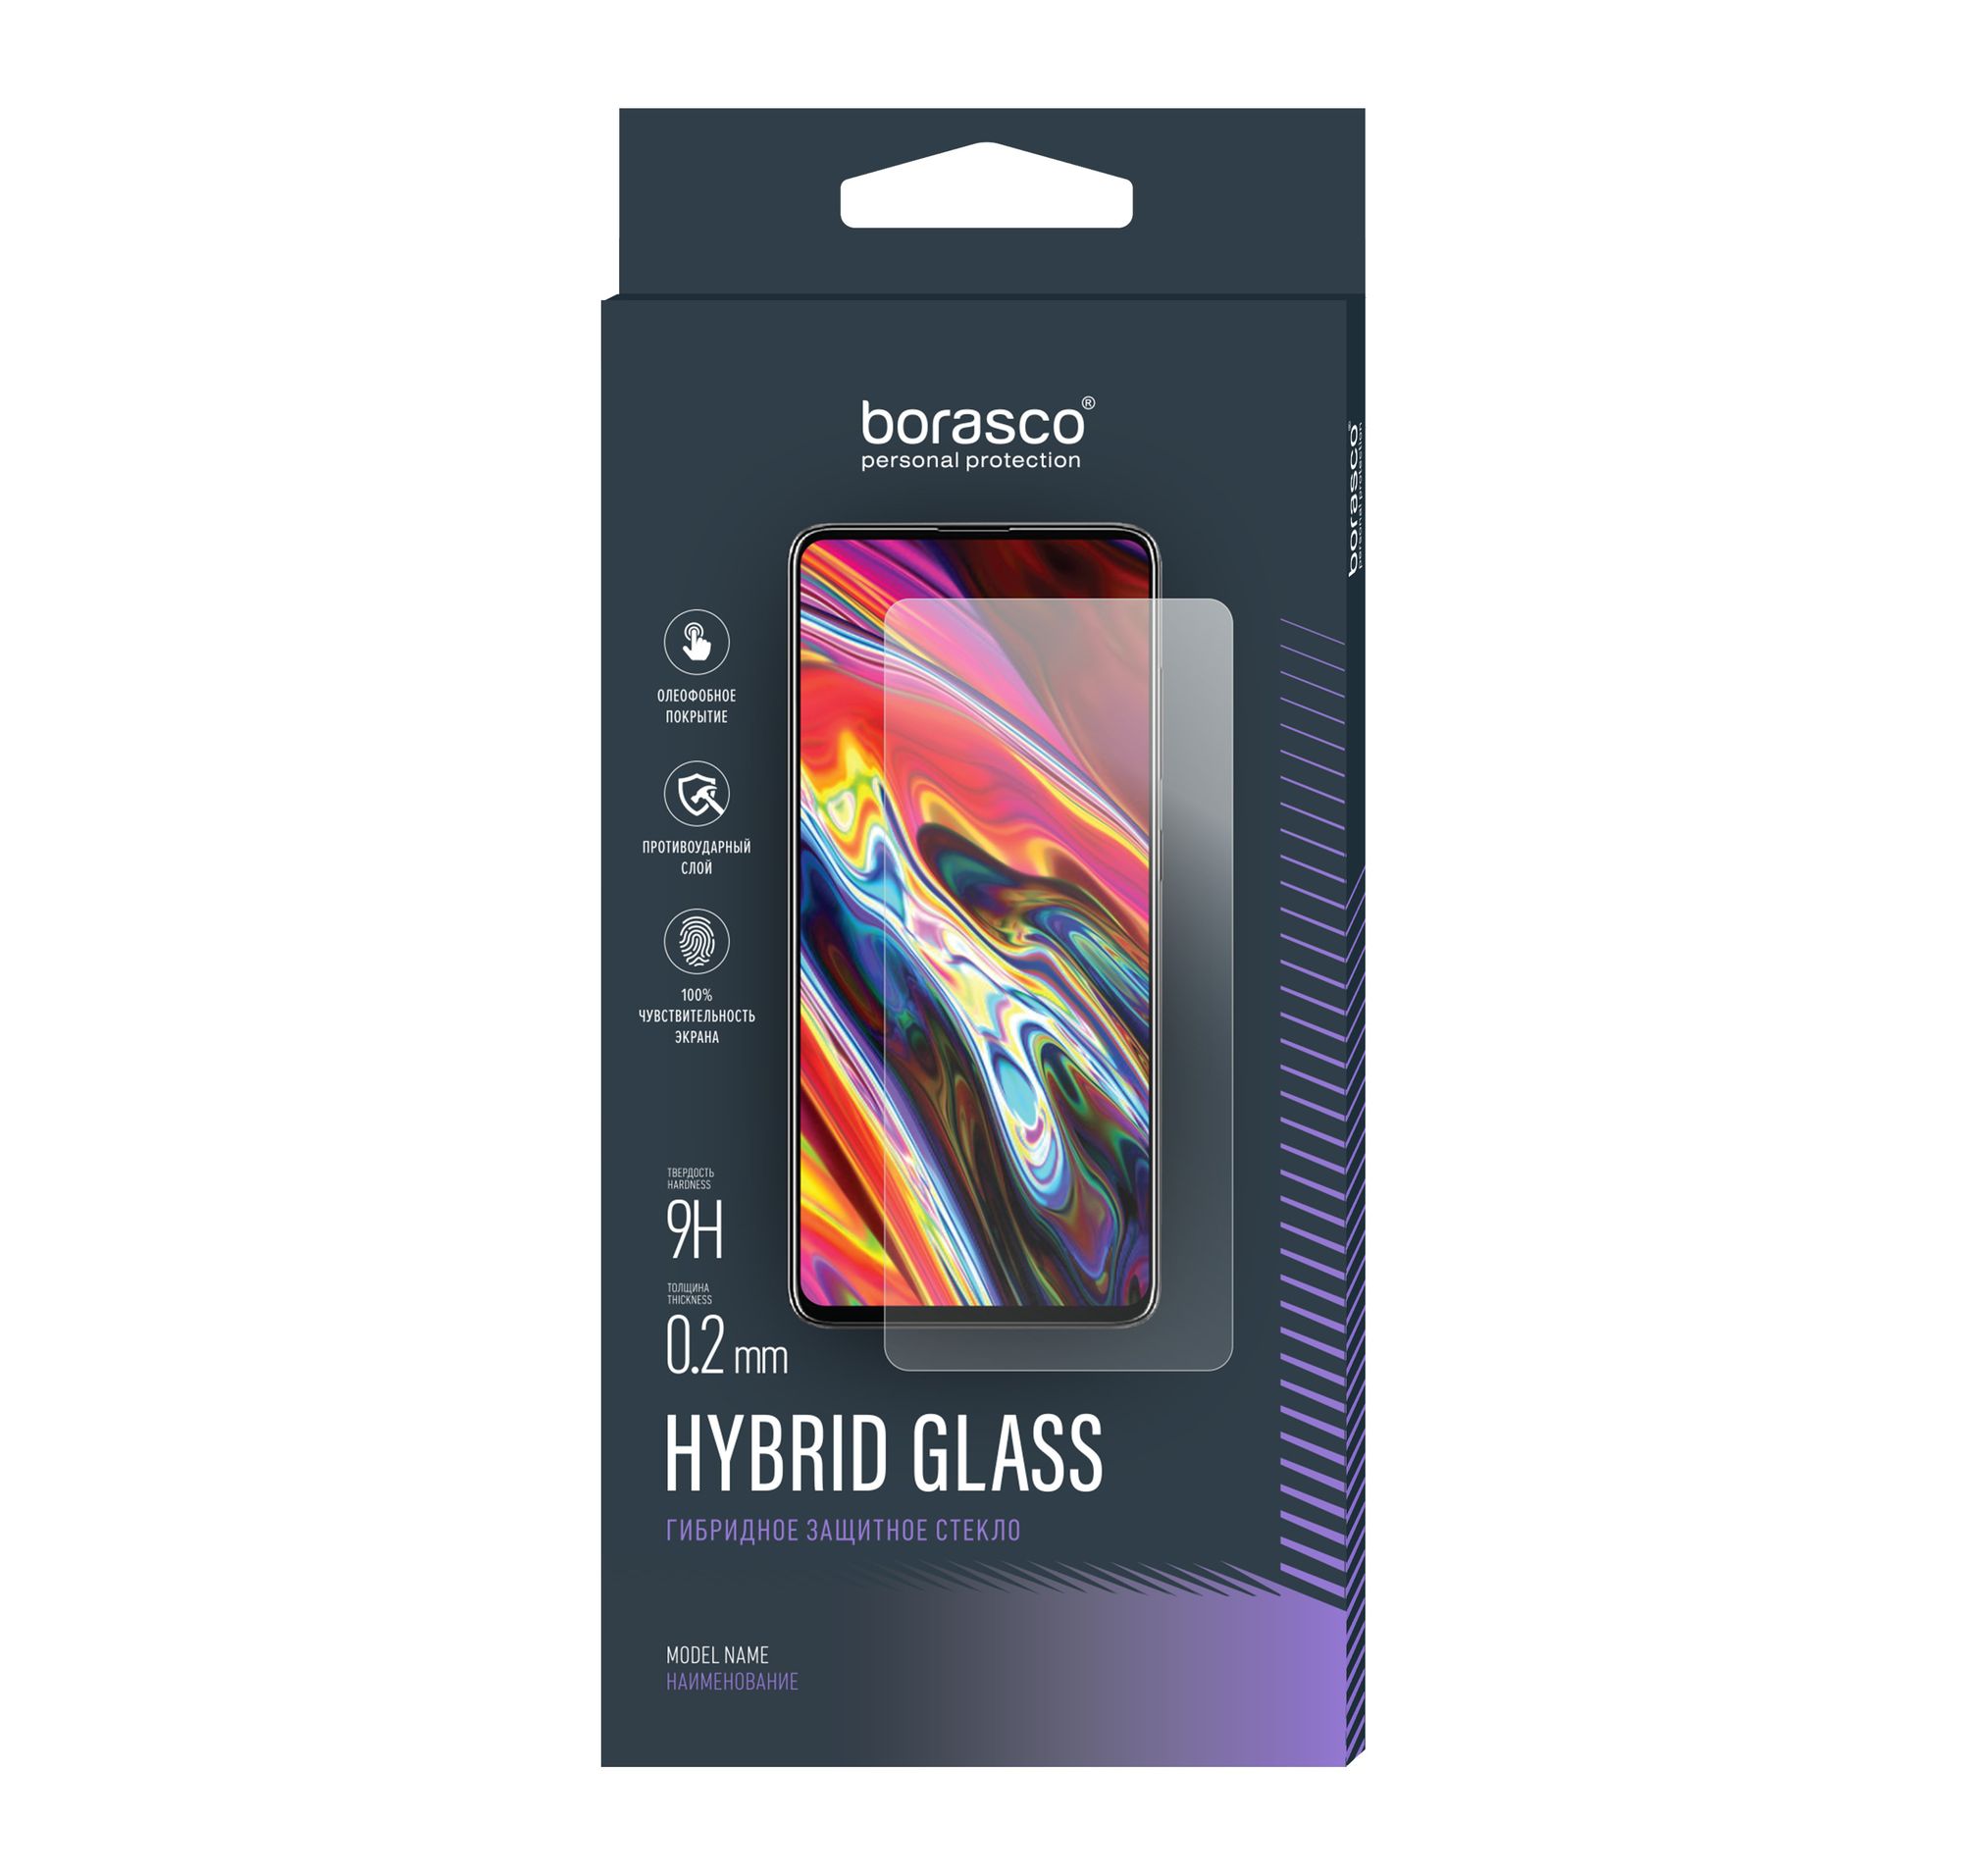 Стекло защитное Hybrid Glass VSP 0,26 мм для Huawei P20 Lite стекло камеры для huawei p20 lite nova 3e